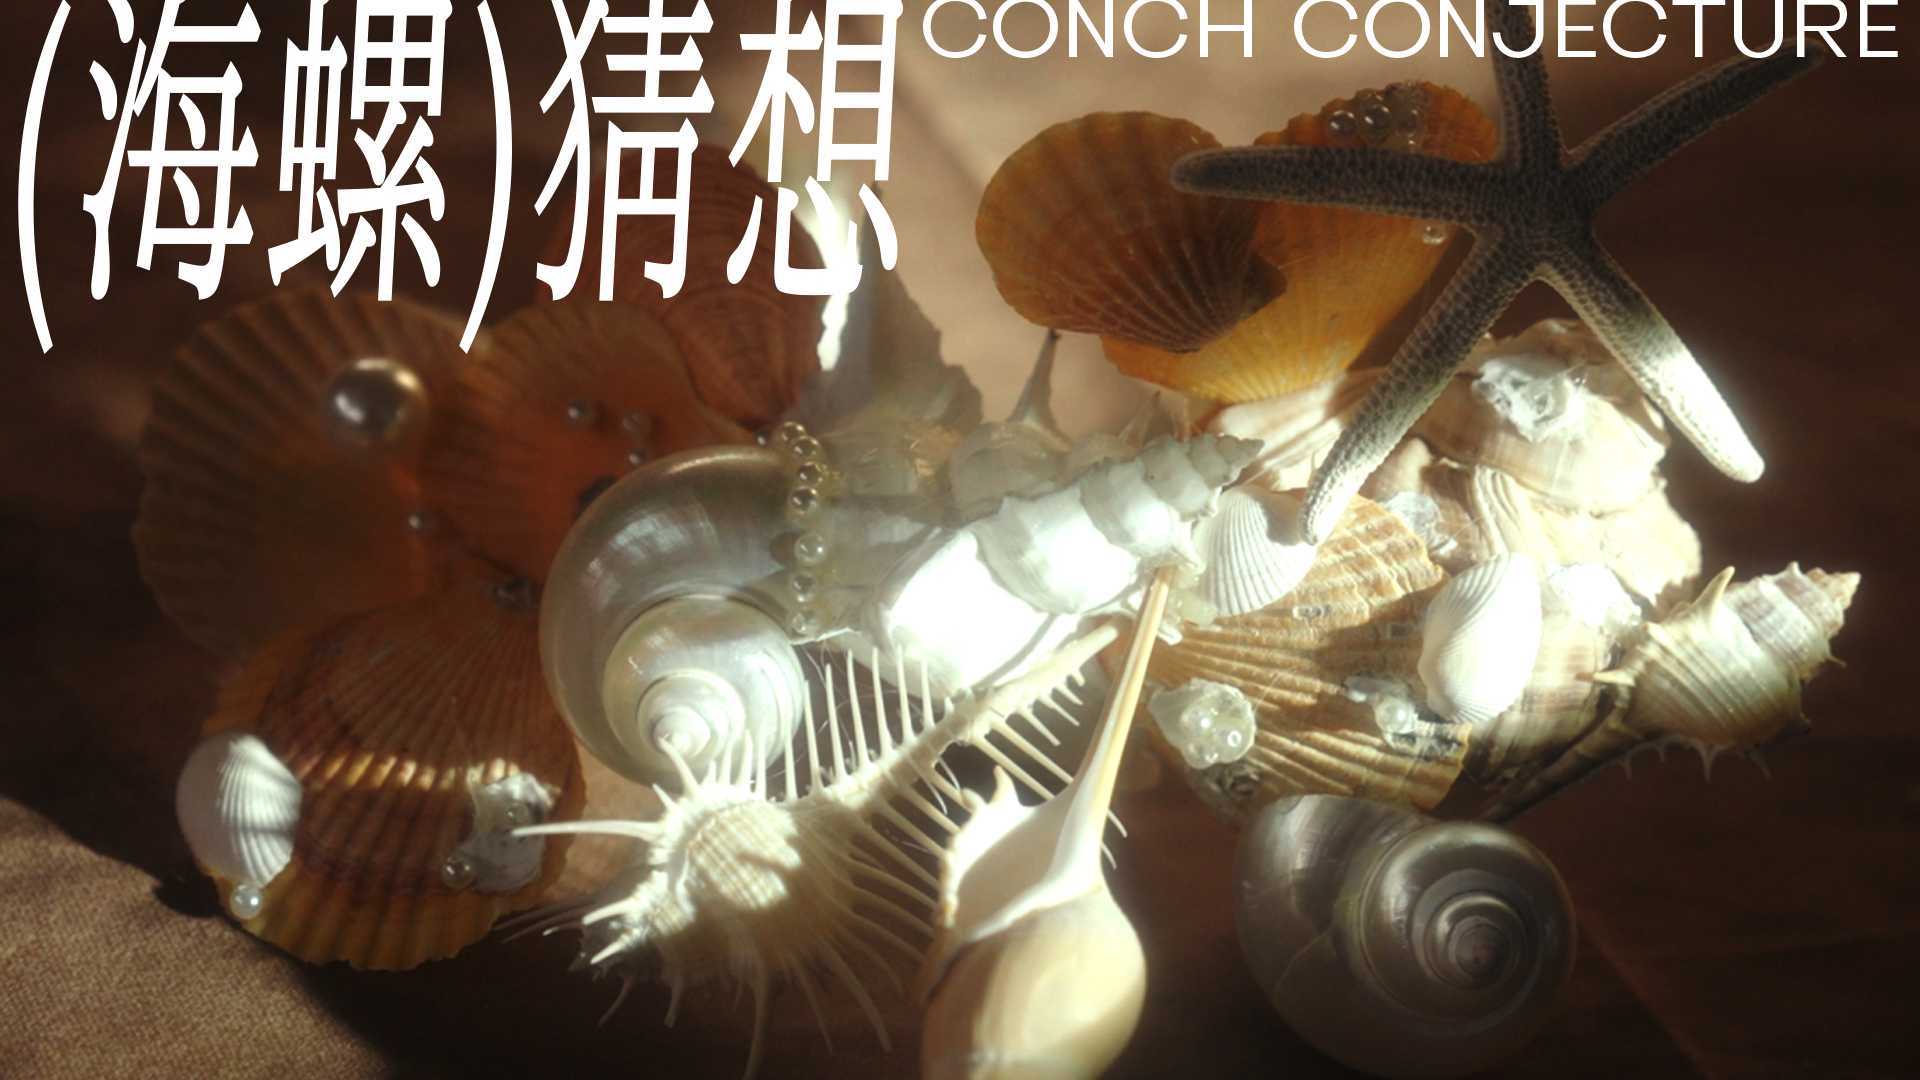 海螺猜想 < Conch conjecture >